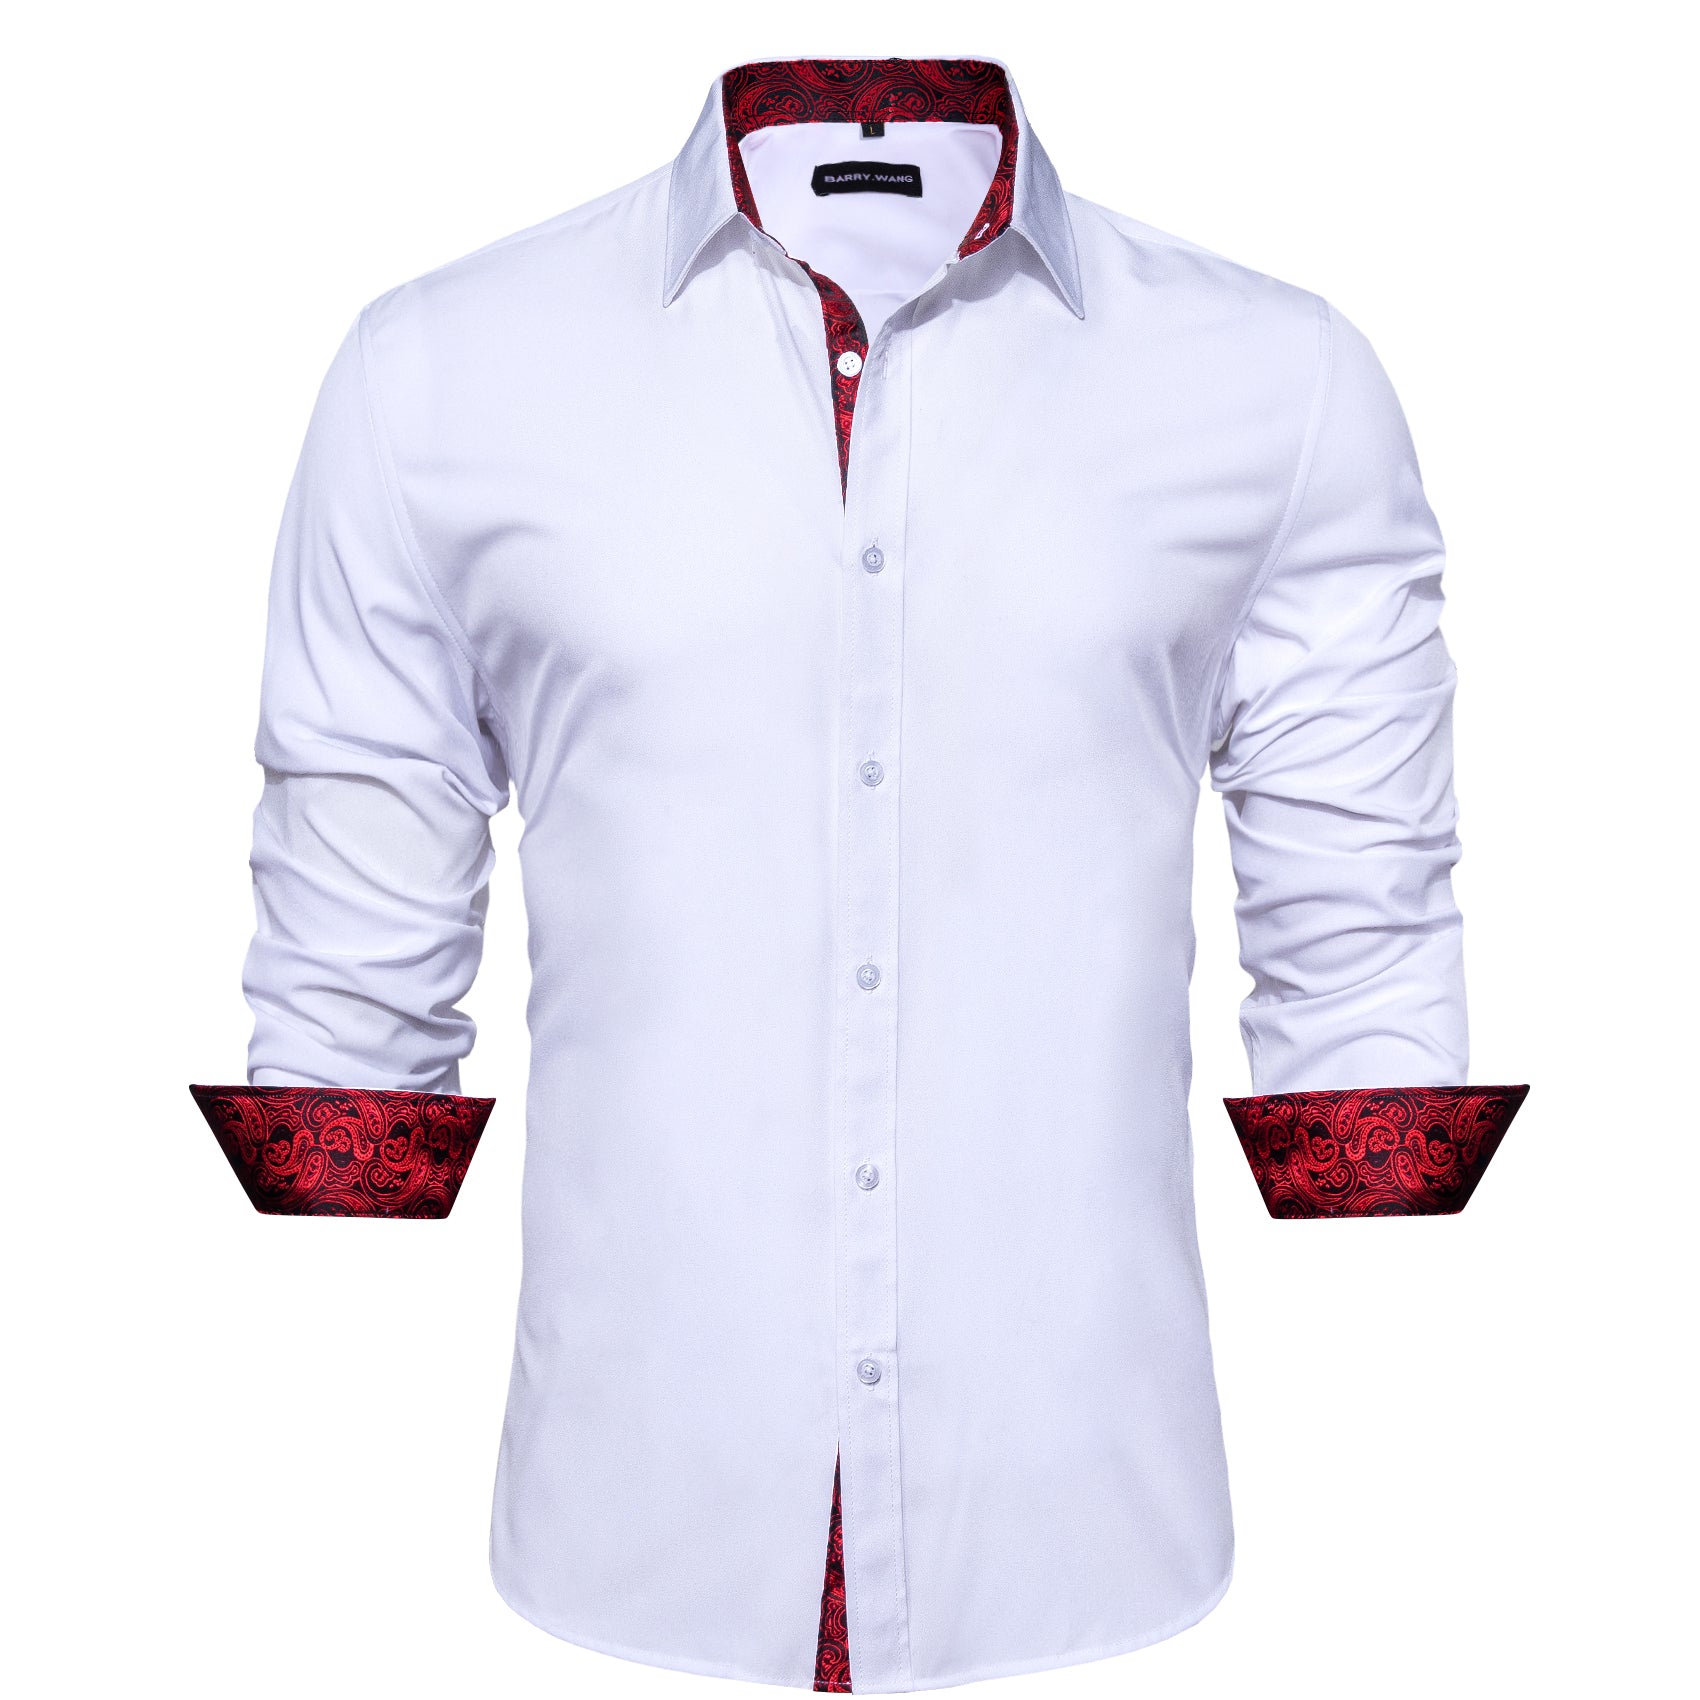 Barry.wang Fromal White Red Splicing Men's Shirt